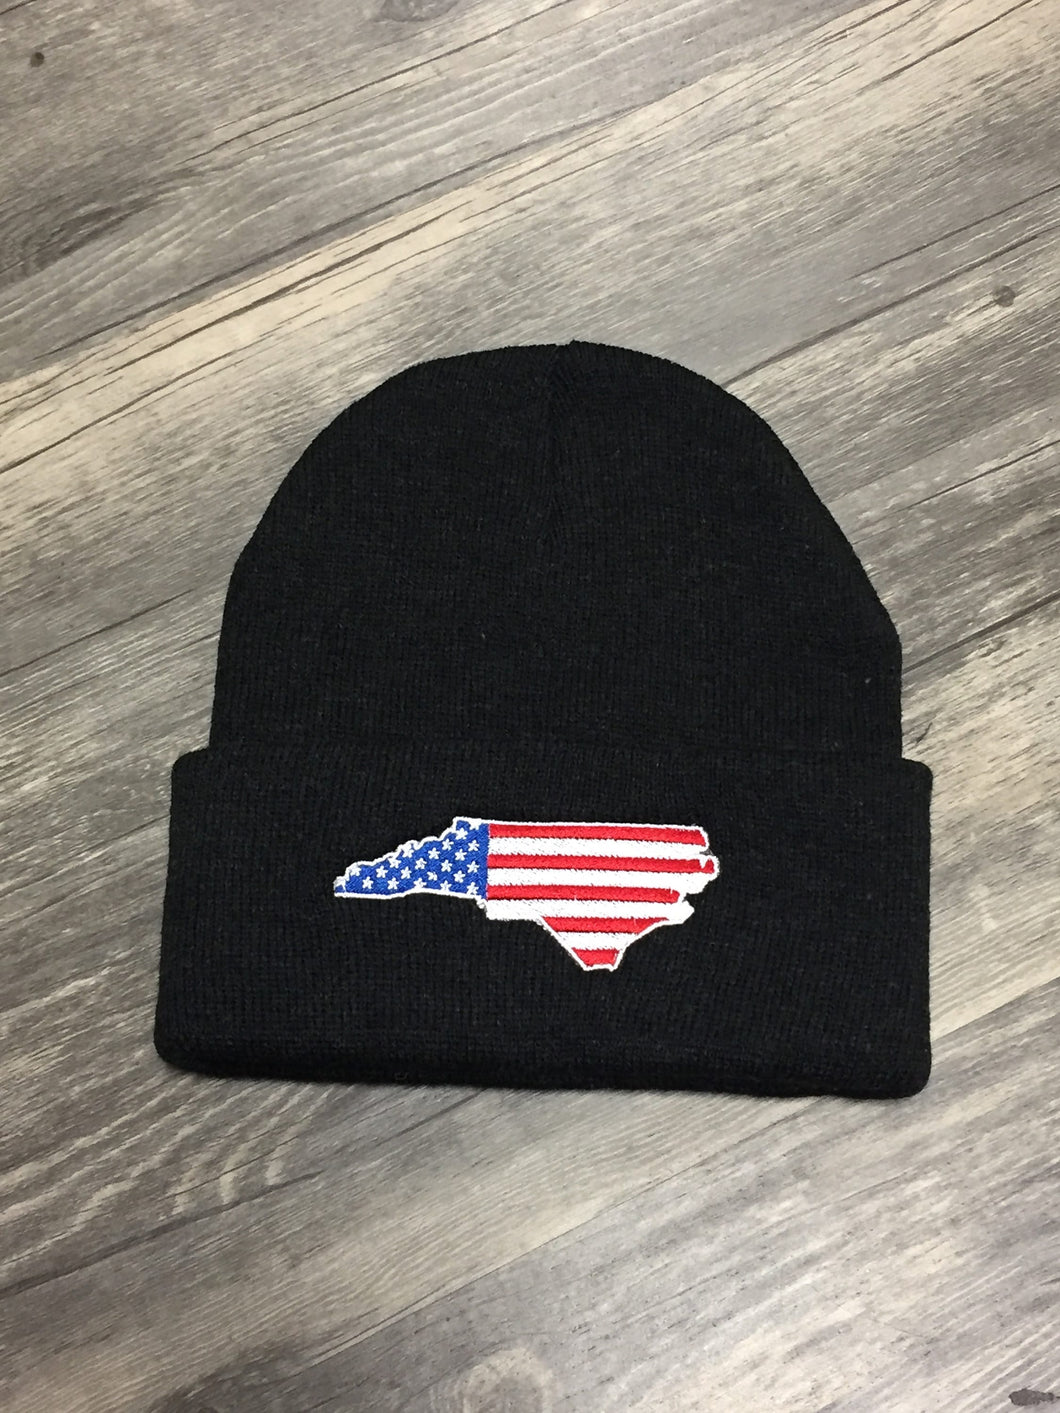 North Carolina with American Flag | Toboggan | Winter Hat